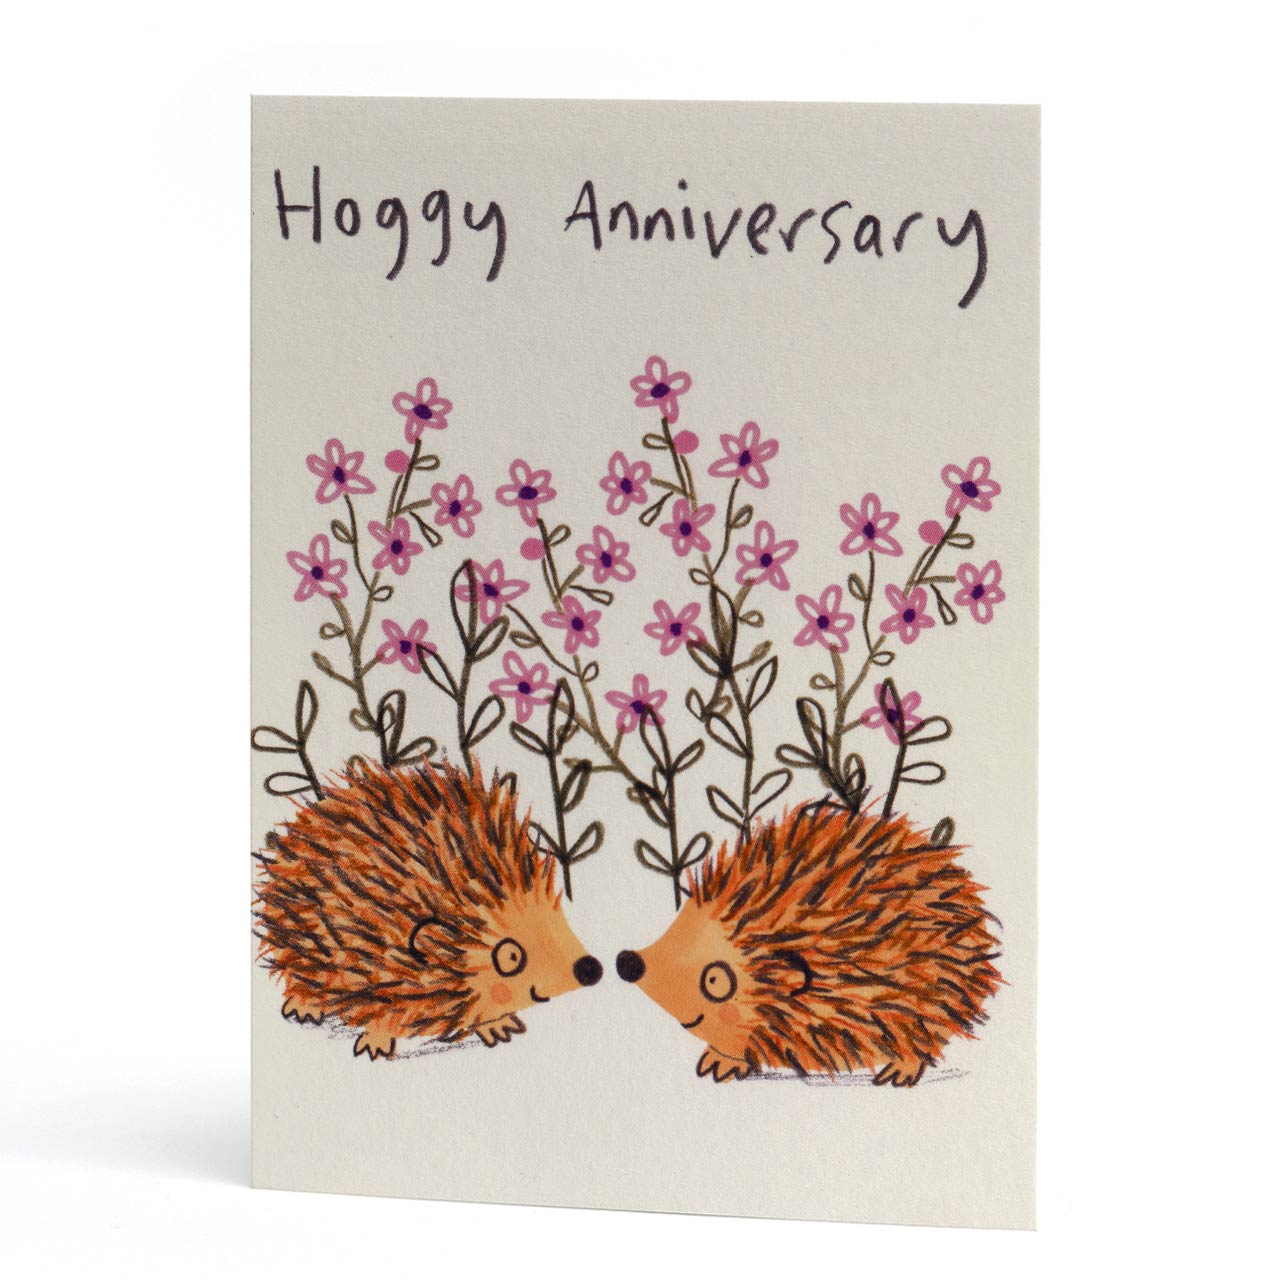 Hoggy Anniversary Greeting Card